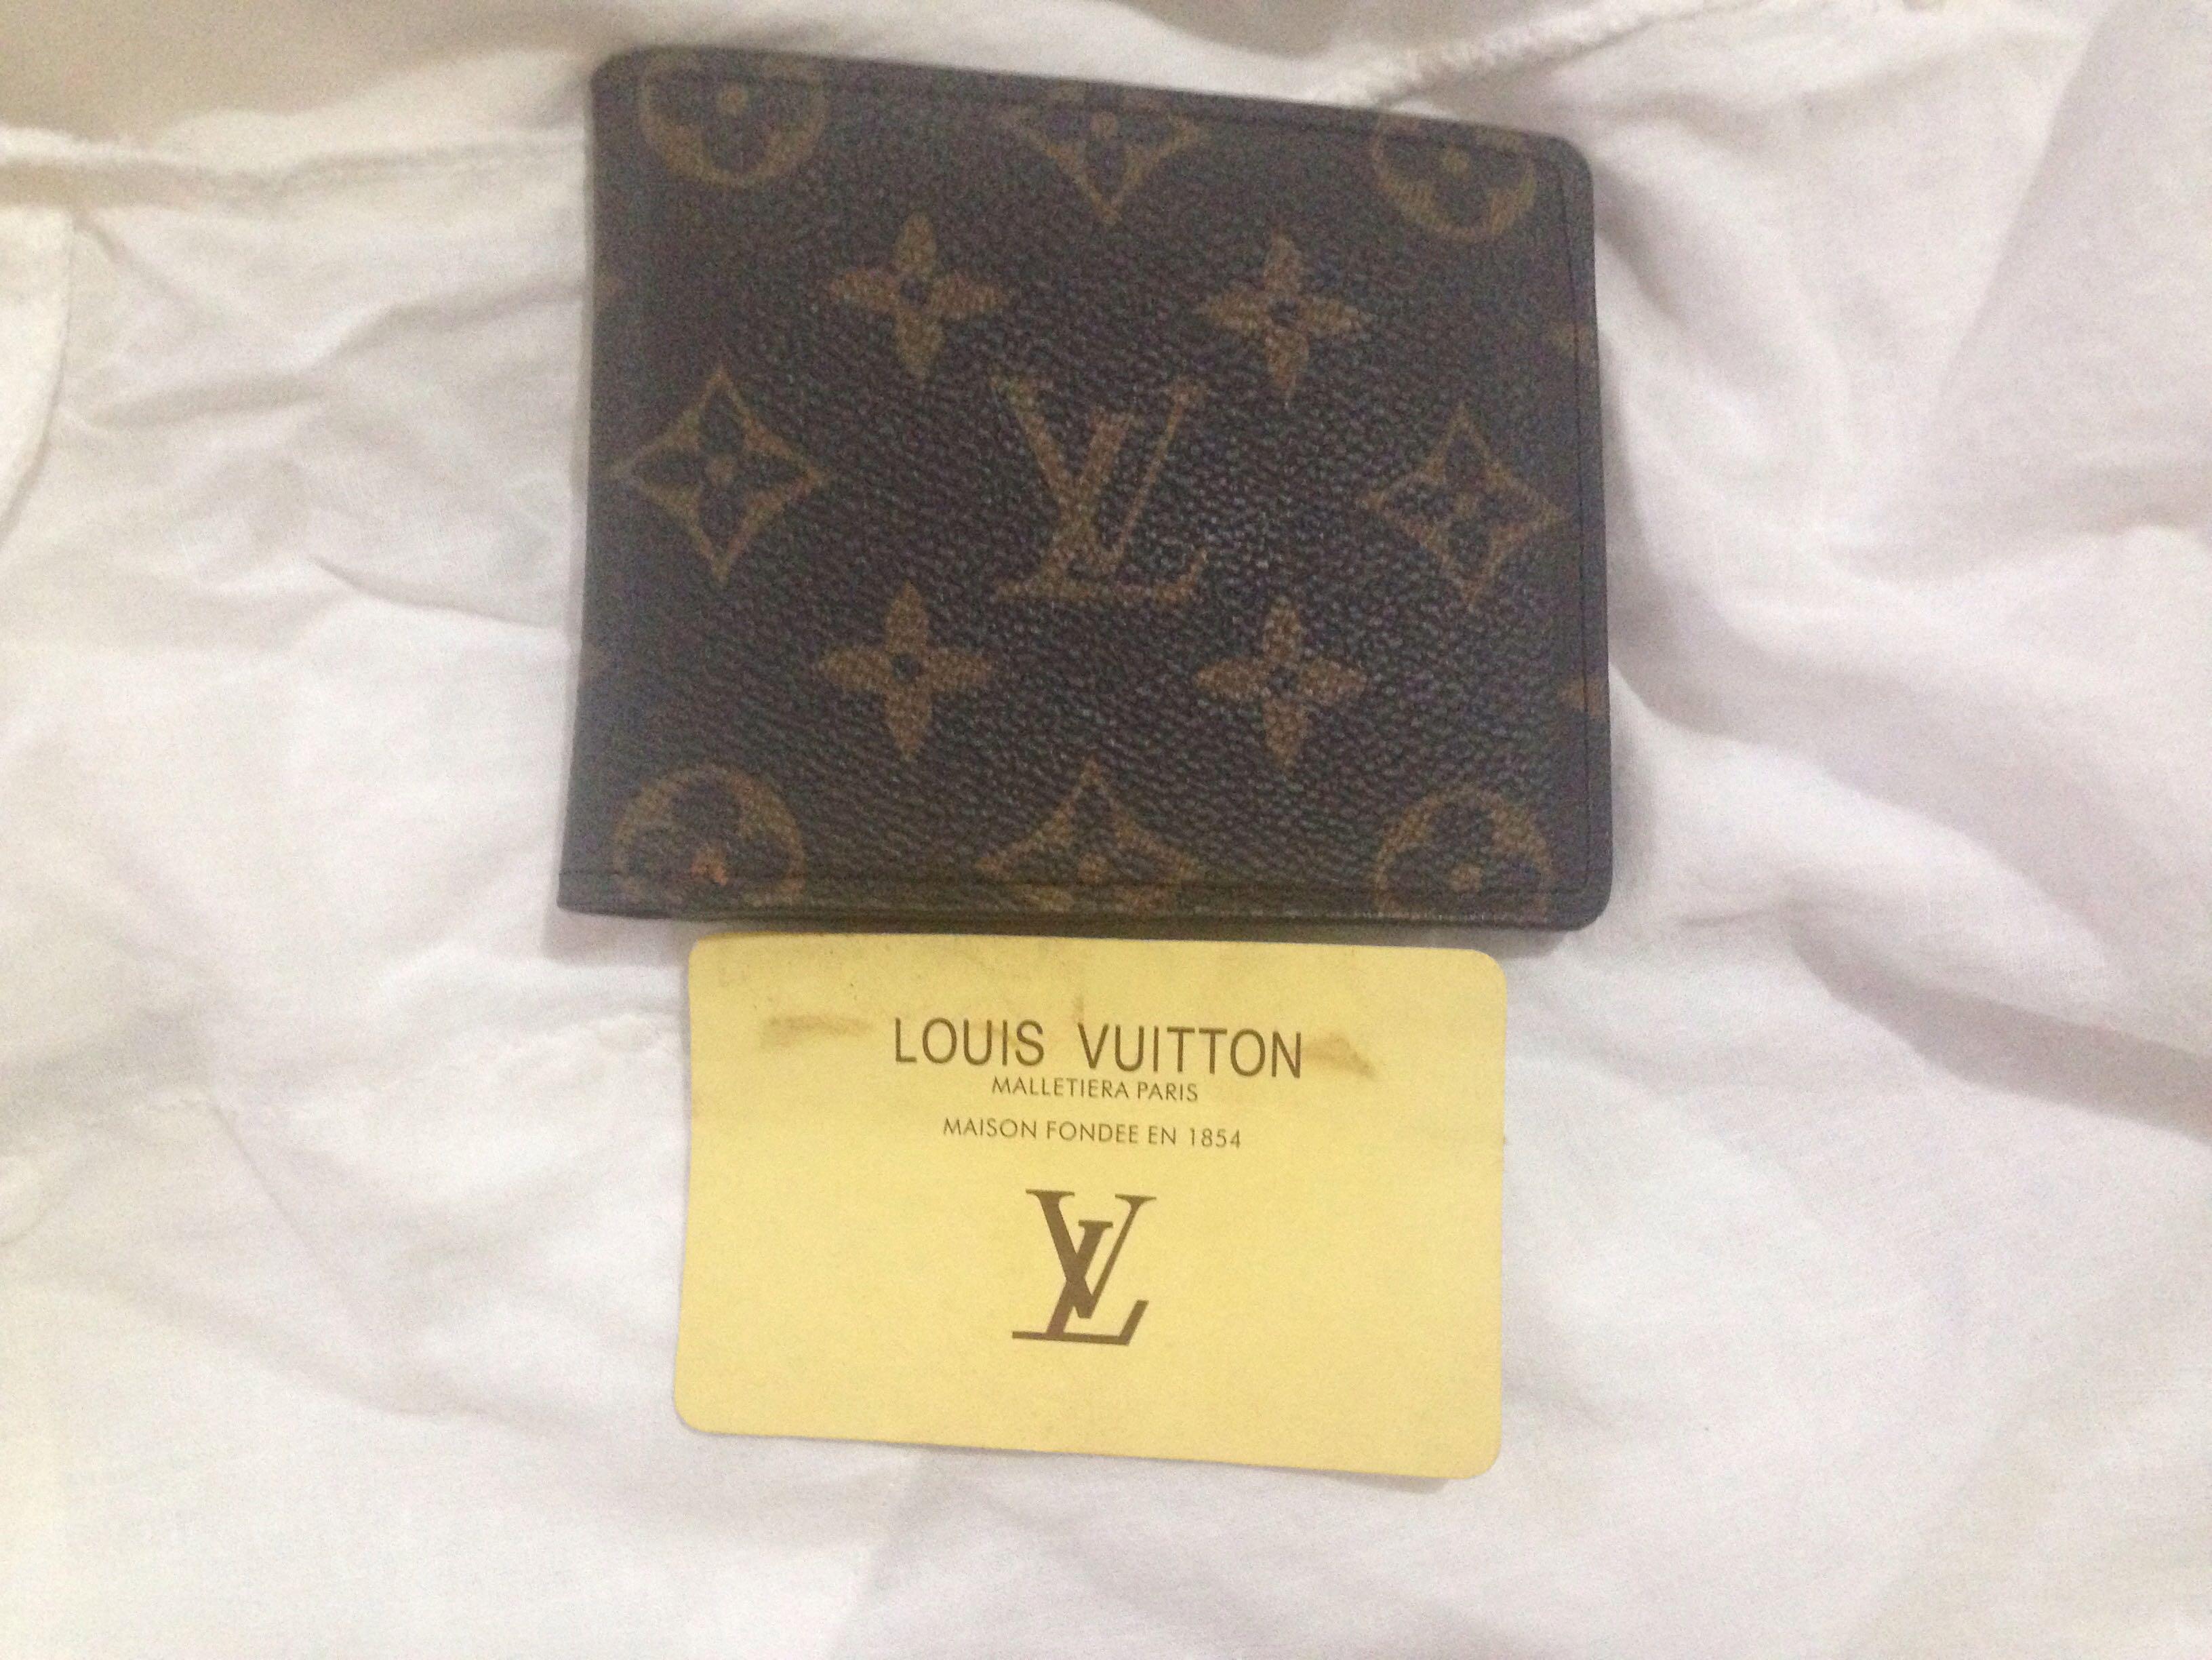 Louis Vuitton Malletiera Paris Maison Fondee En 1854 Wallet